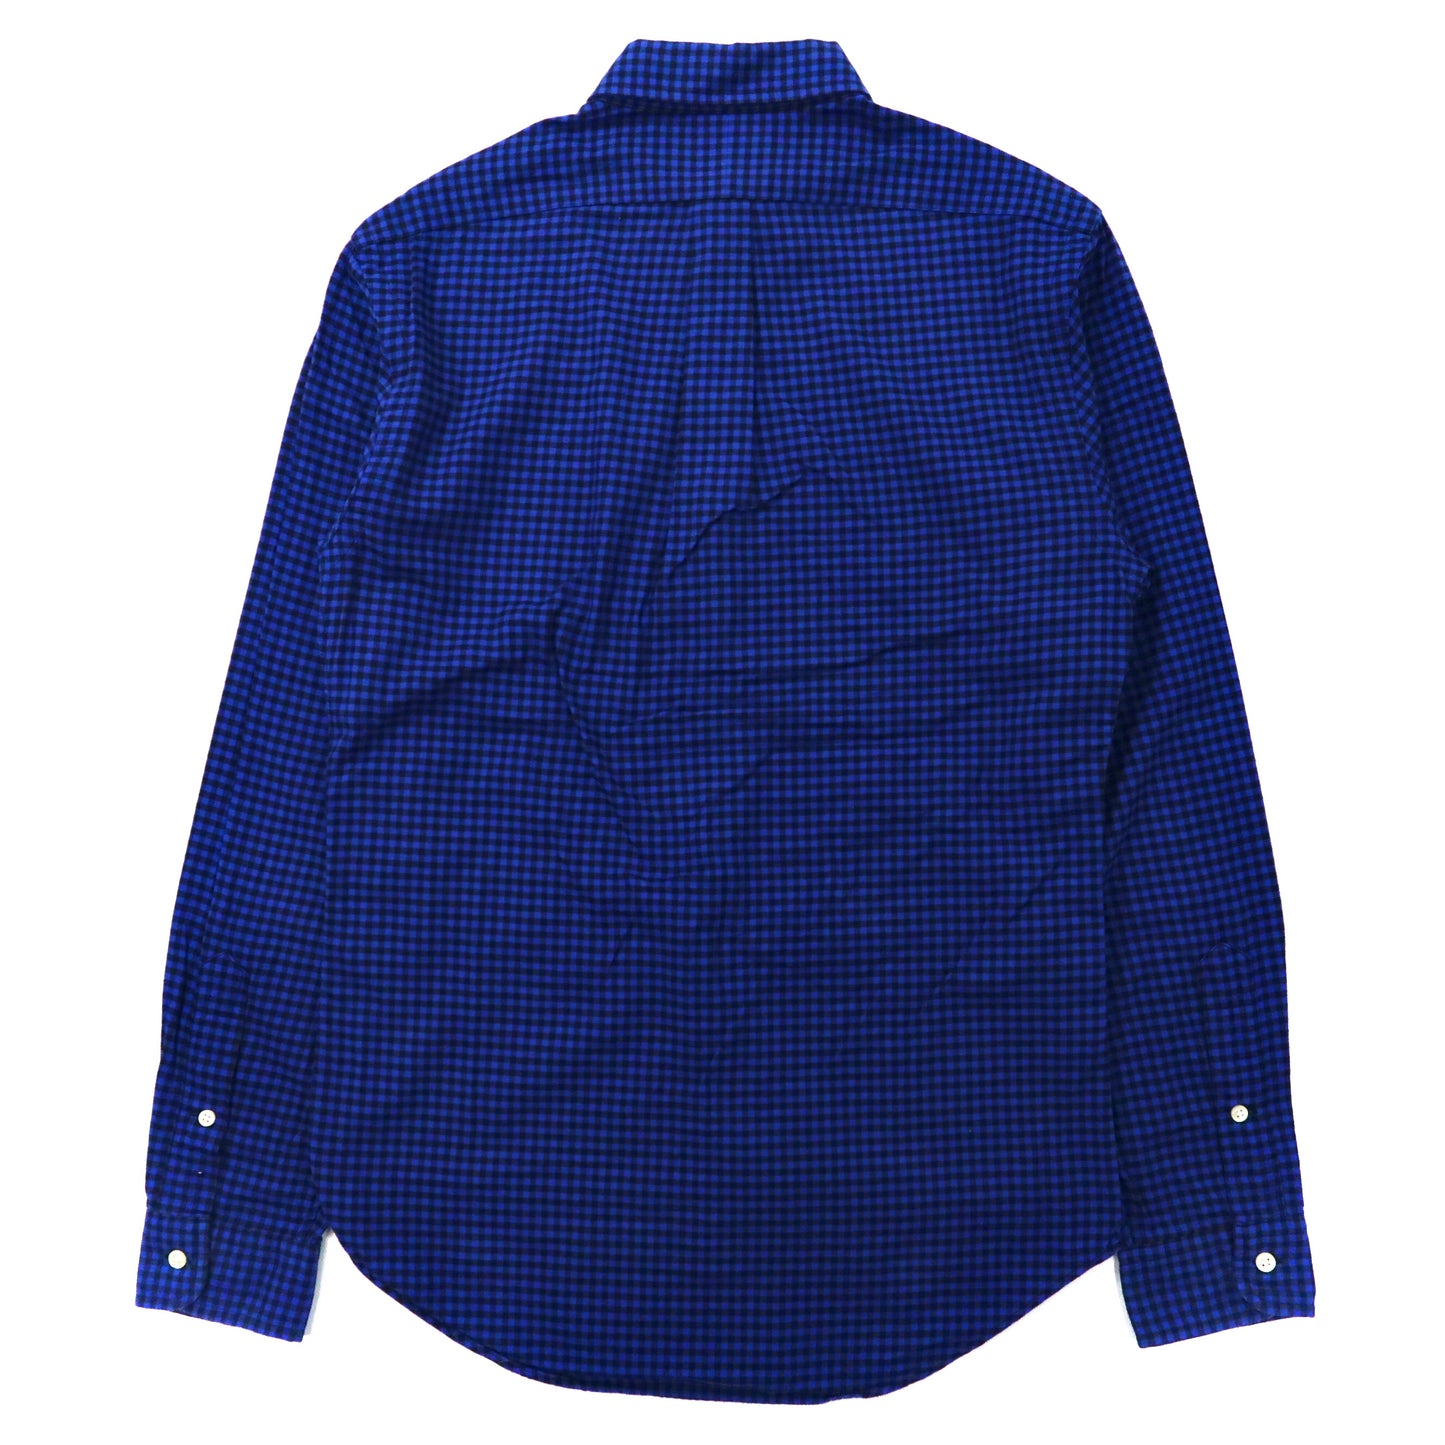 RALPH LAUREN ボタンダウンシャツ 170 ブルー チェック コットン SLIM FIT スモールポニー刺繍